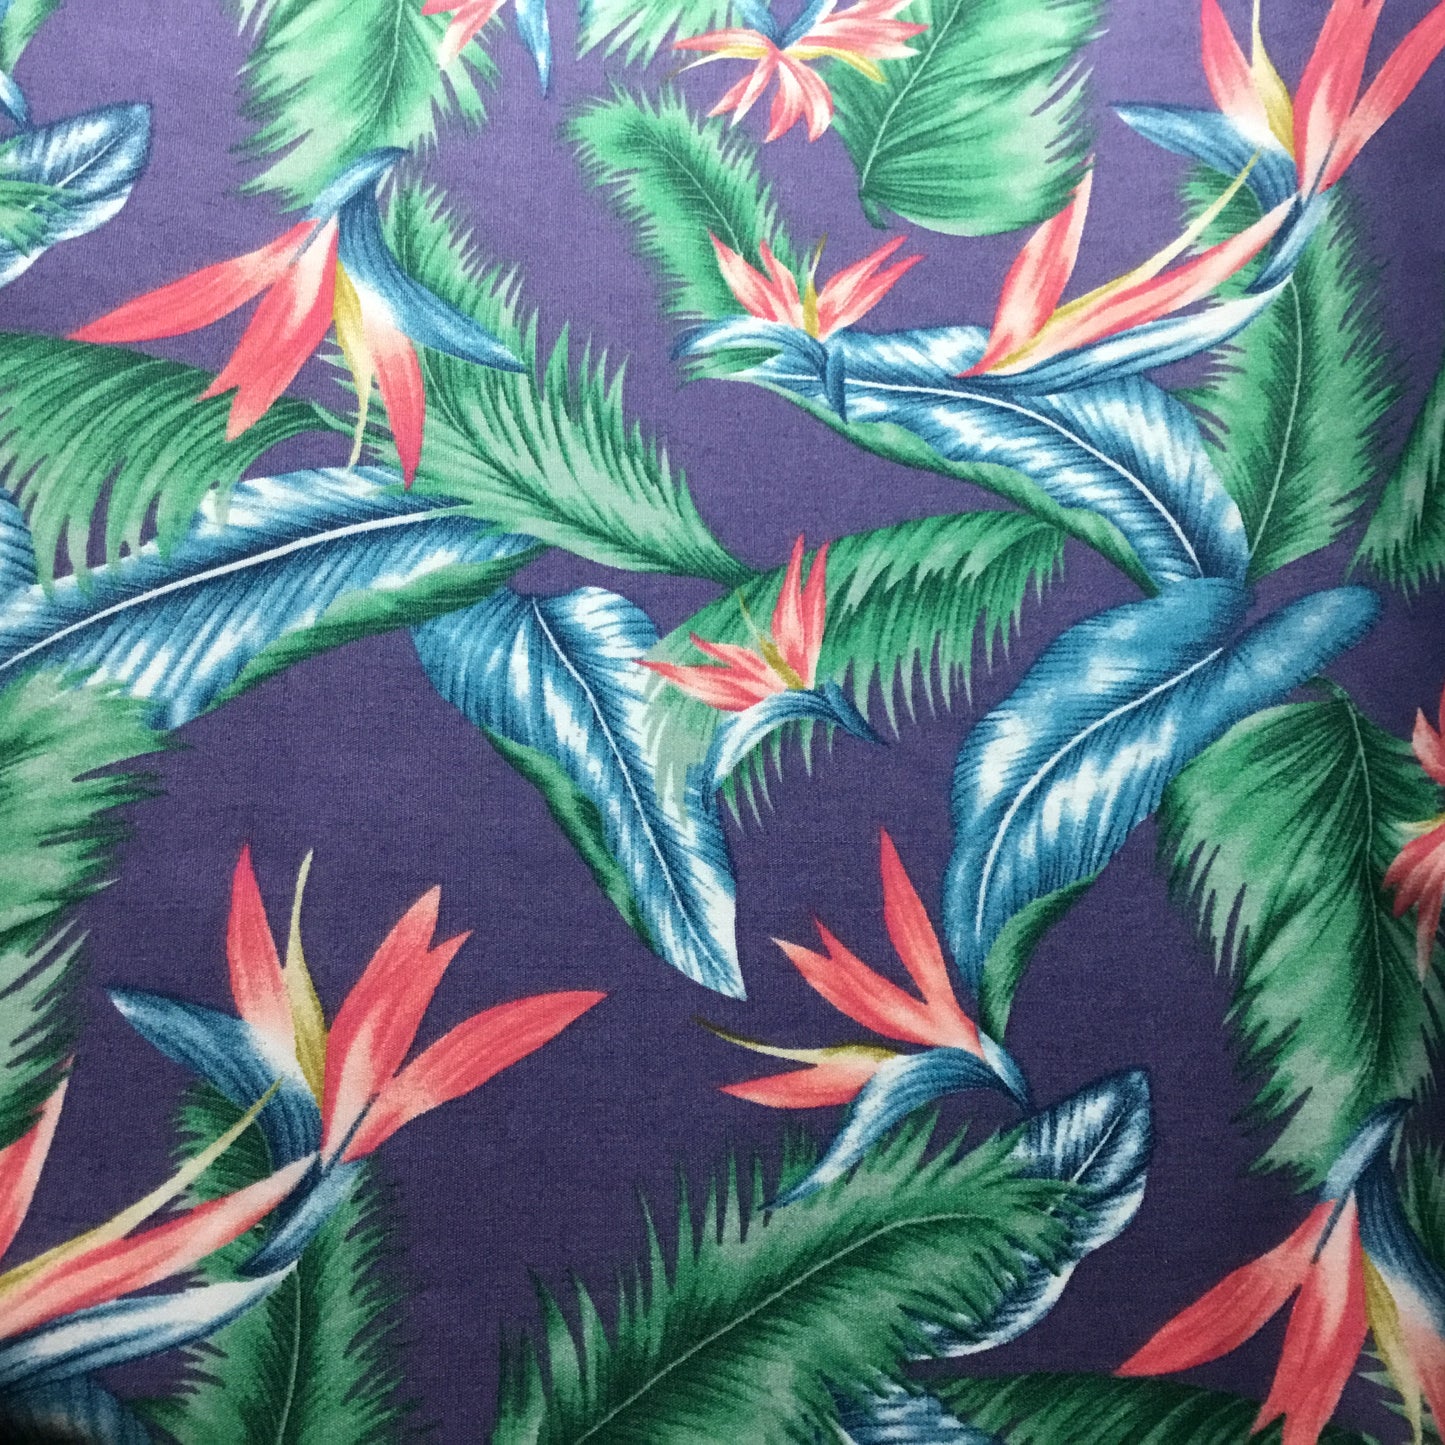 Birds of paradise 100% Cotton Poplin Print - You’ve Got Me In Stitches